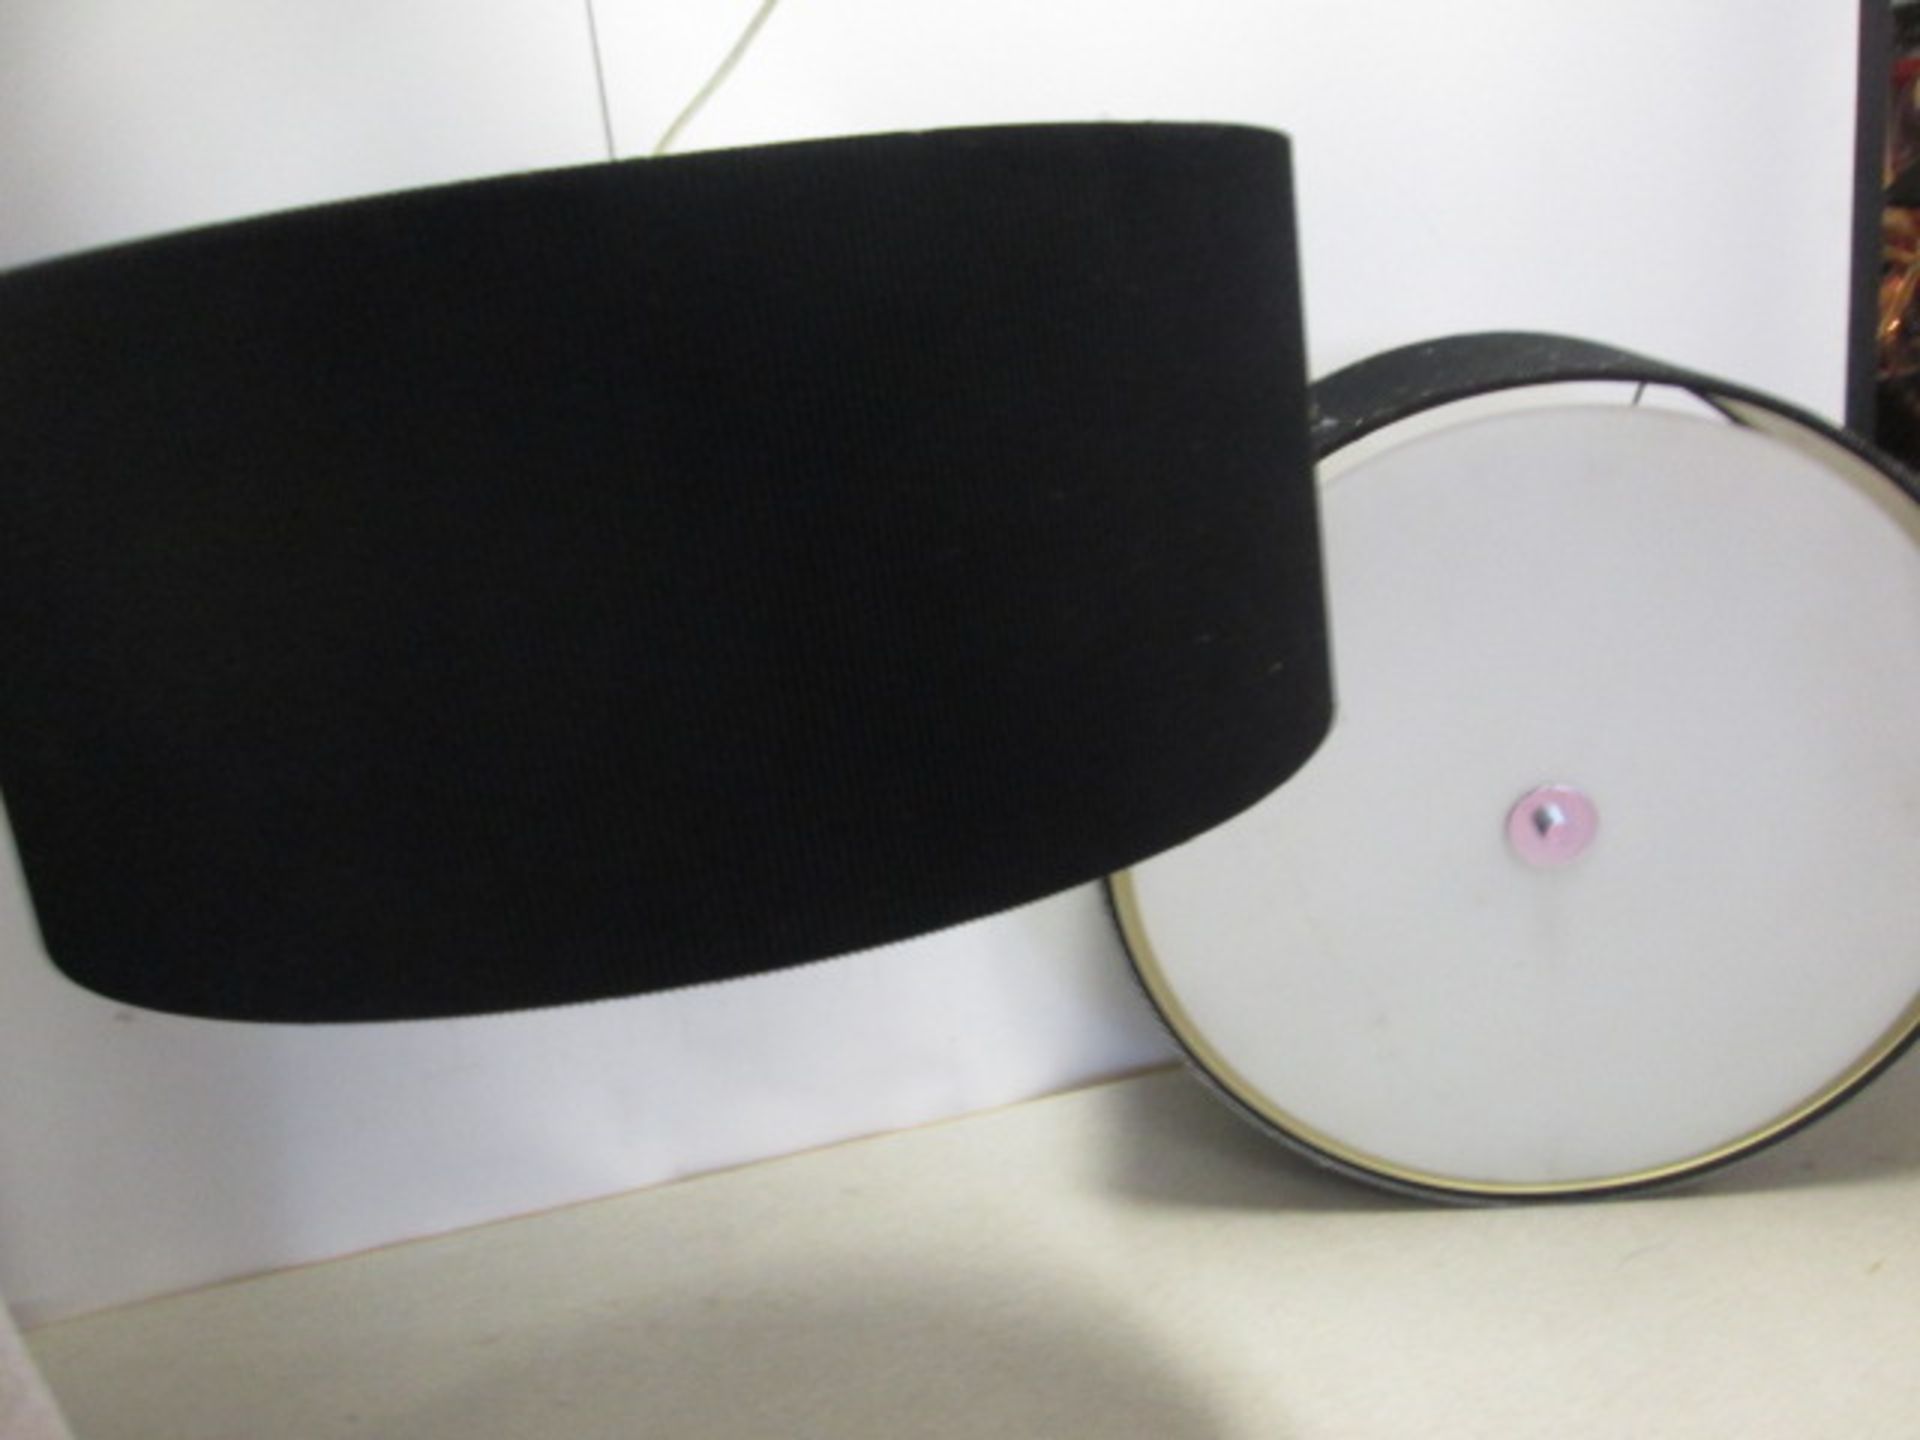 2 x Dar Zaragoza 3 Lamp 60cm Pendant Light, with a Black Cotton Micro Pleat Shade. 1 Light Missing